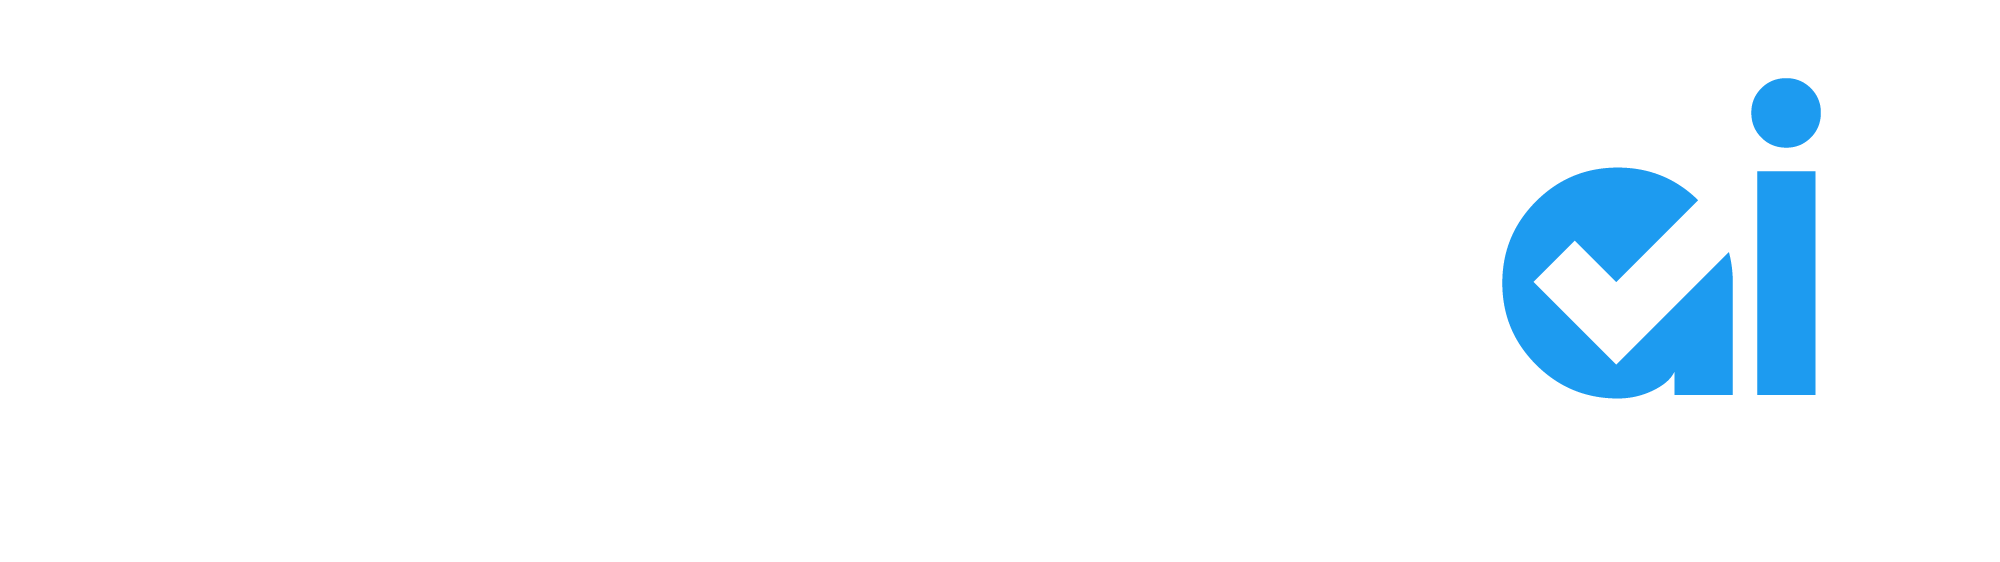 Simple.ai logo on a dark blue background